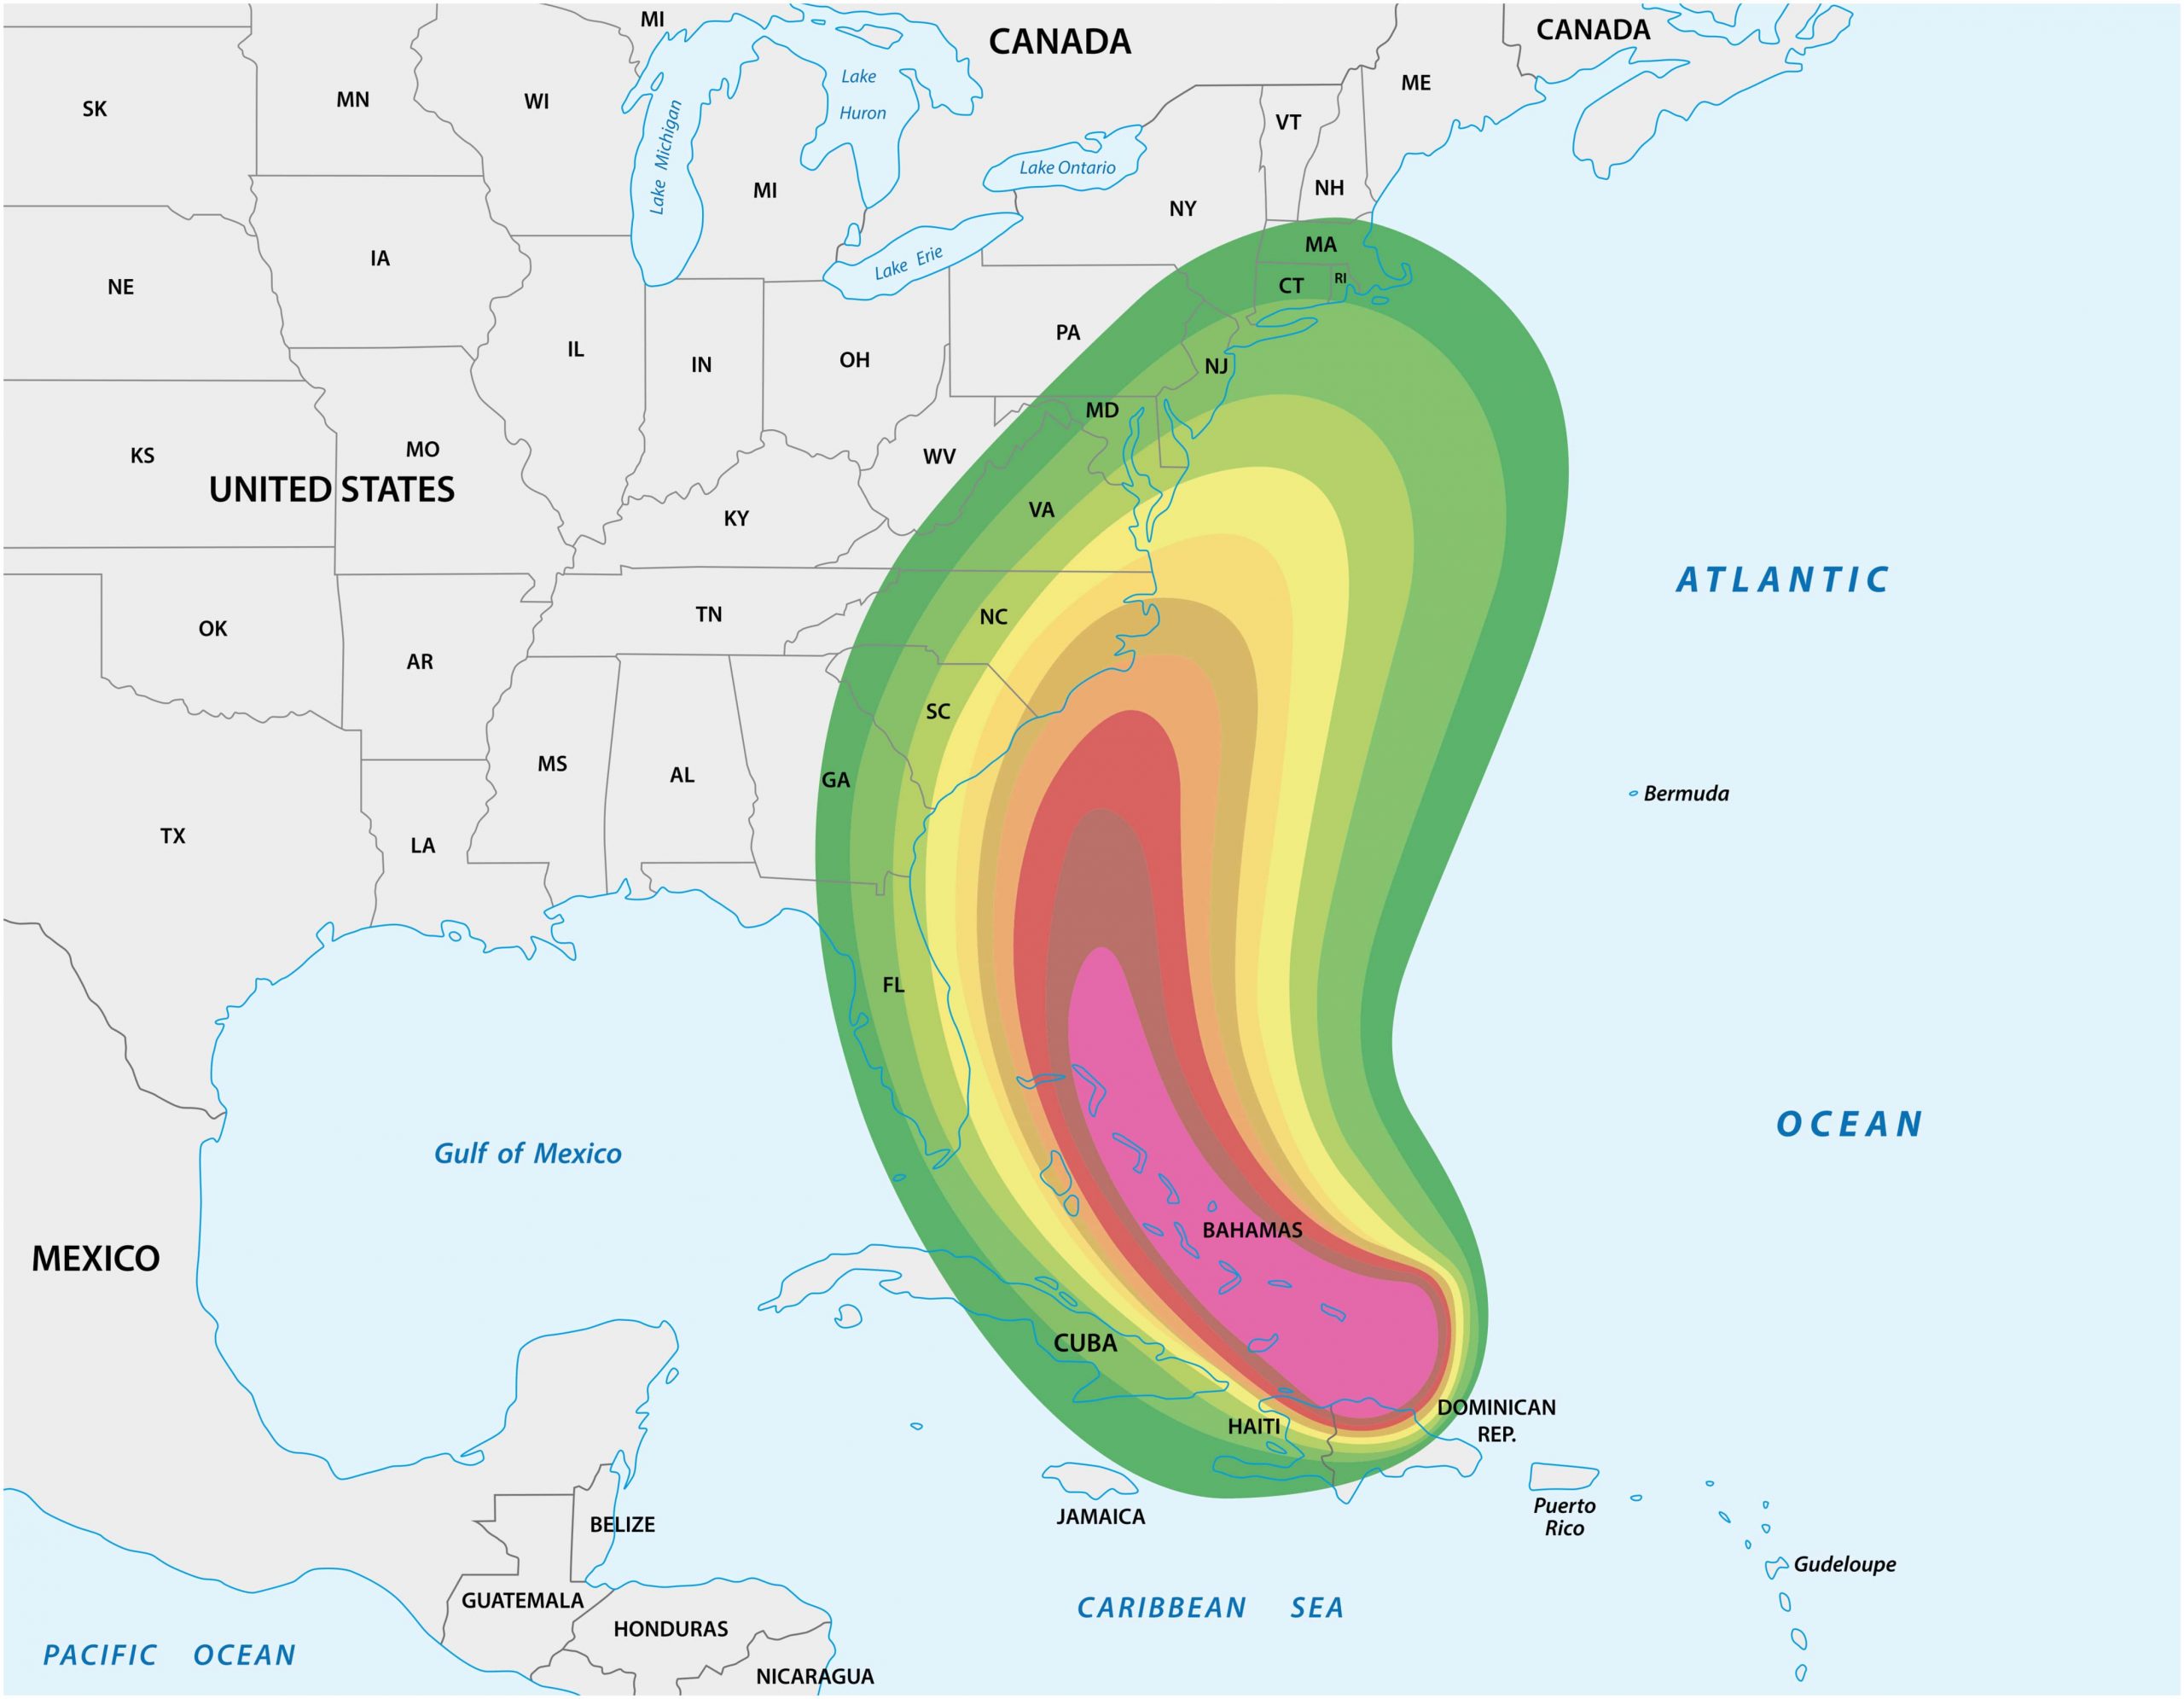 CSU’s 2022 Forecast of Atlantic Hurricane Season Hurricane Damage